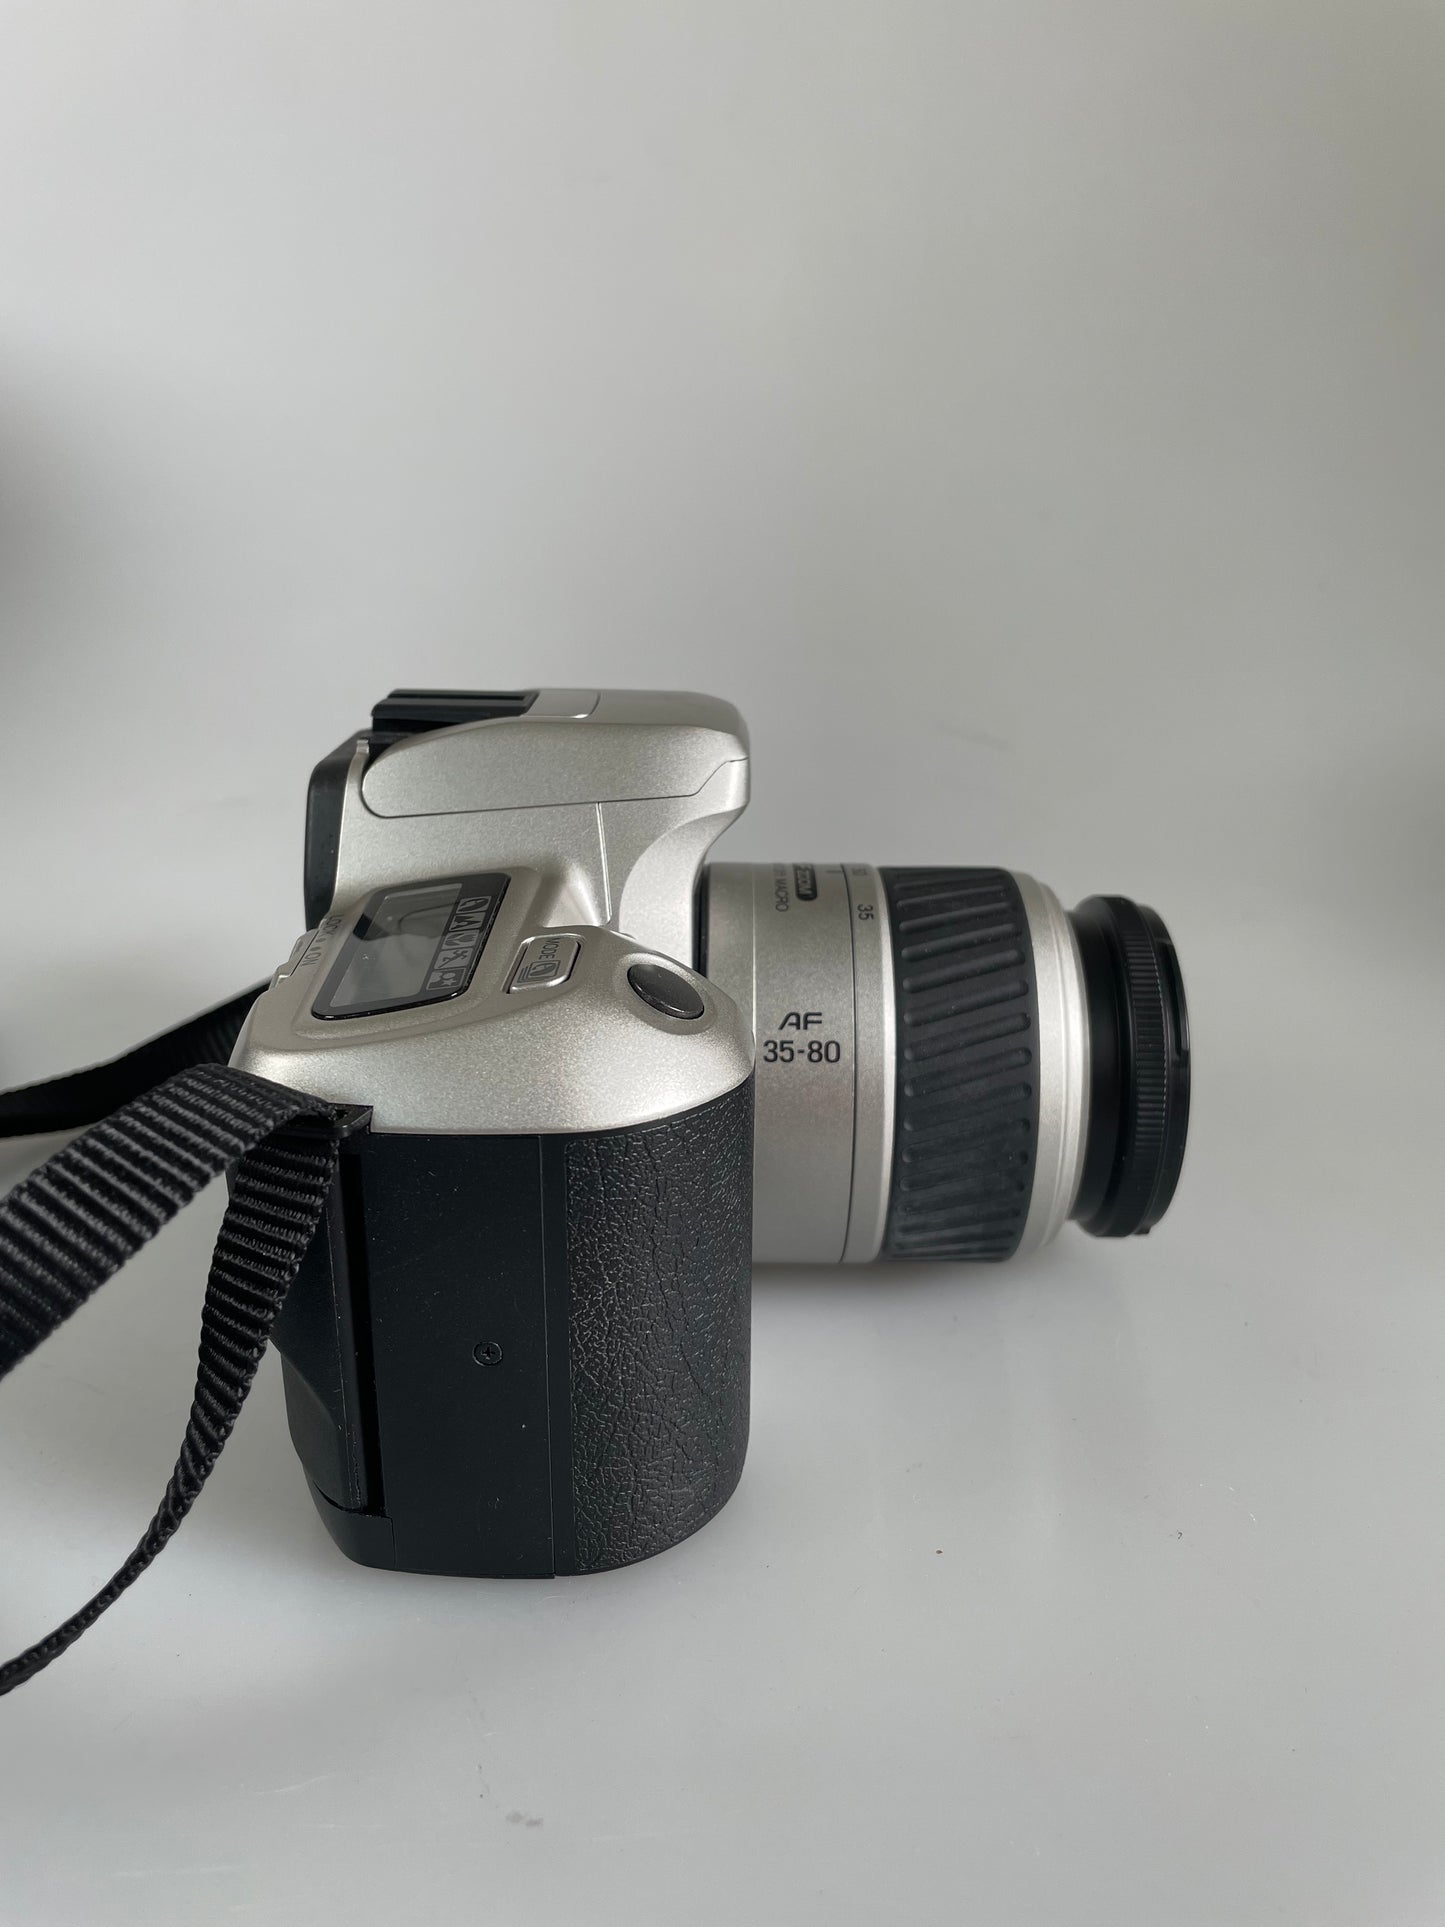 Minolta Maxxum QTsi 35mm SLR Film Camera with 35-80mm AF Zoom Lens